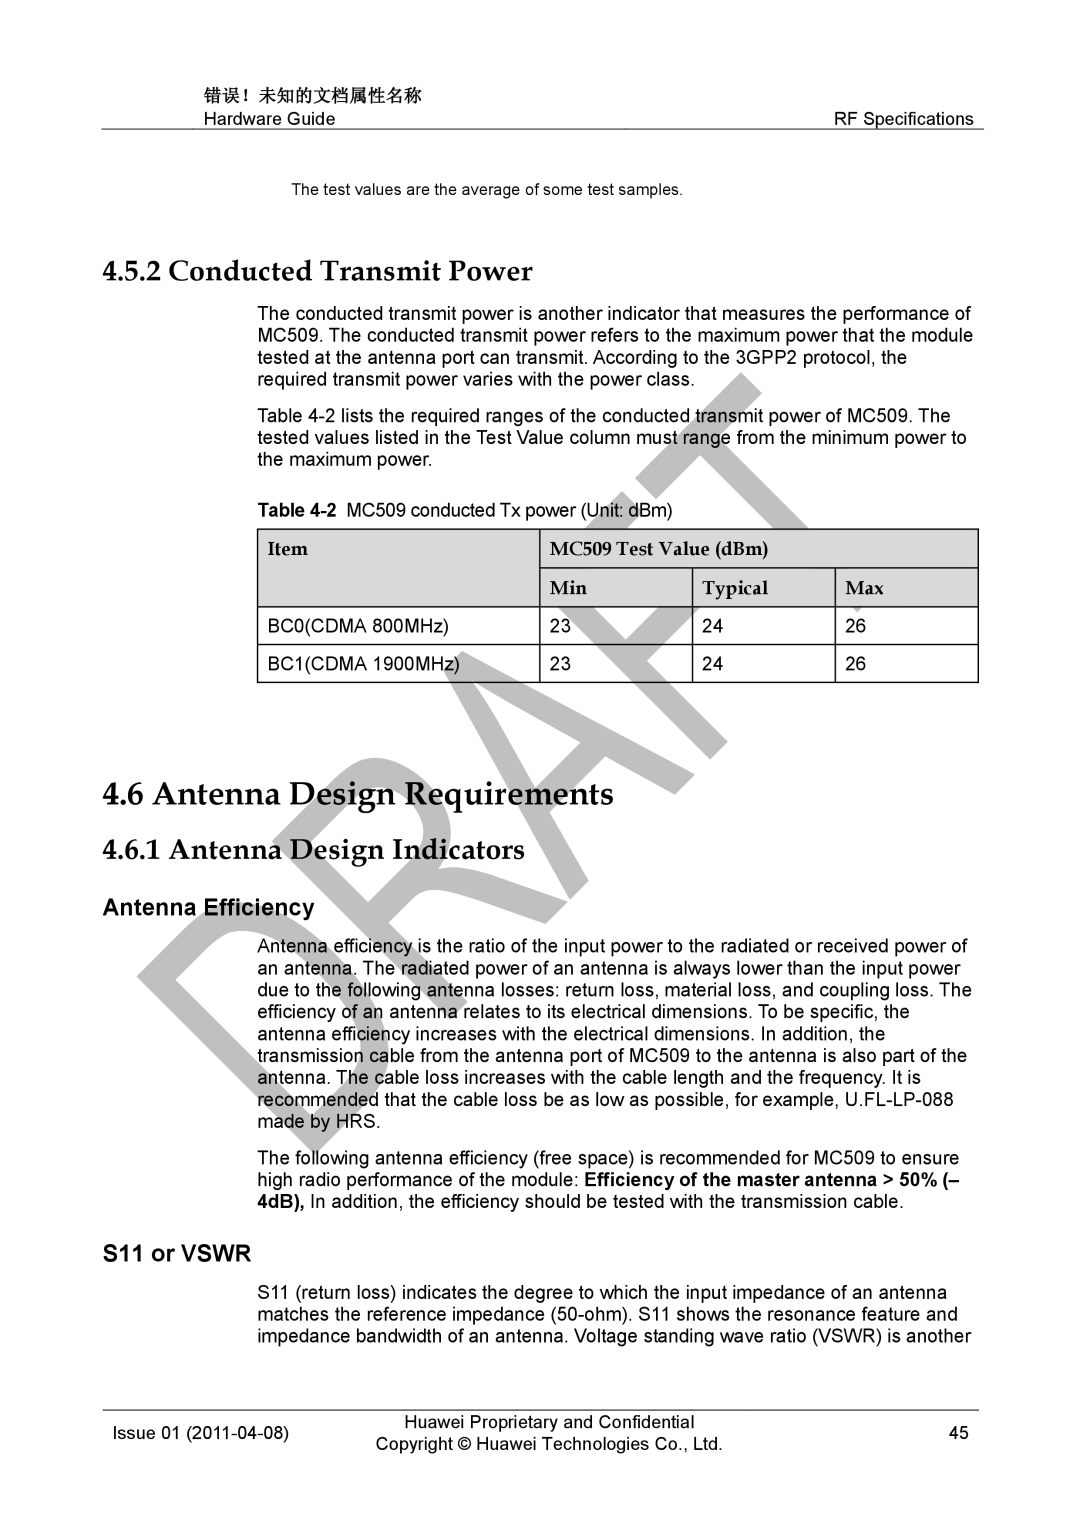 Huawei MC509 CDMA LGA Antenna Design Requirements, Conducted Transmit Power, Antenna Design Indicators, Antenna Efficiency 